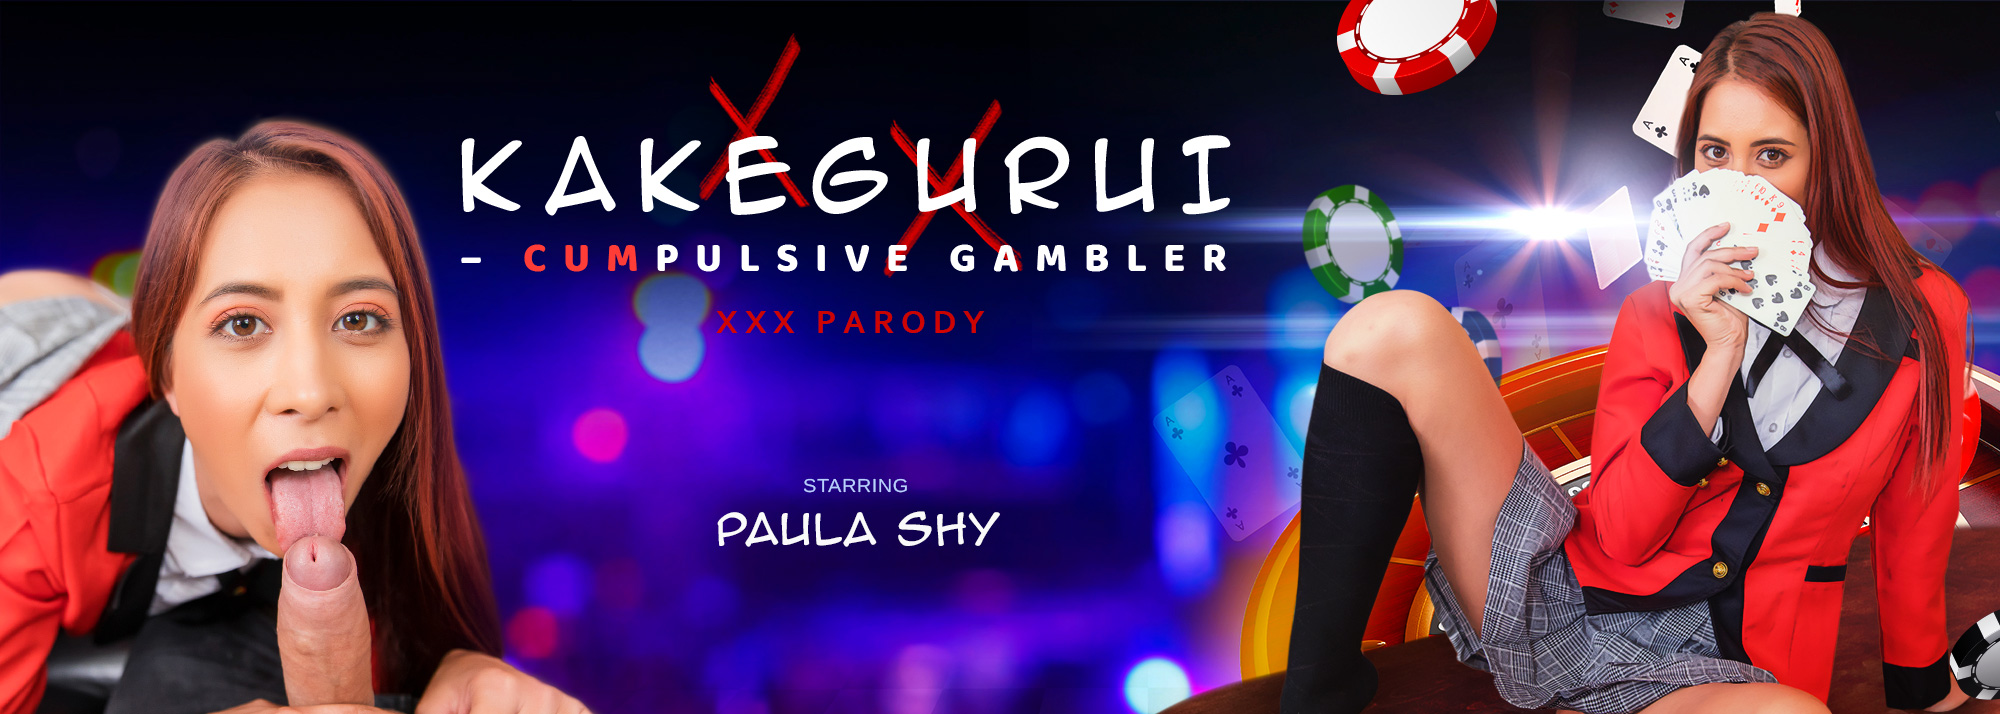 Kakegurui - CUMpulsive Gambler with Paula Shy  Slideshow